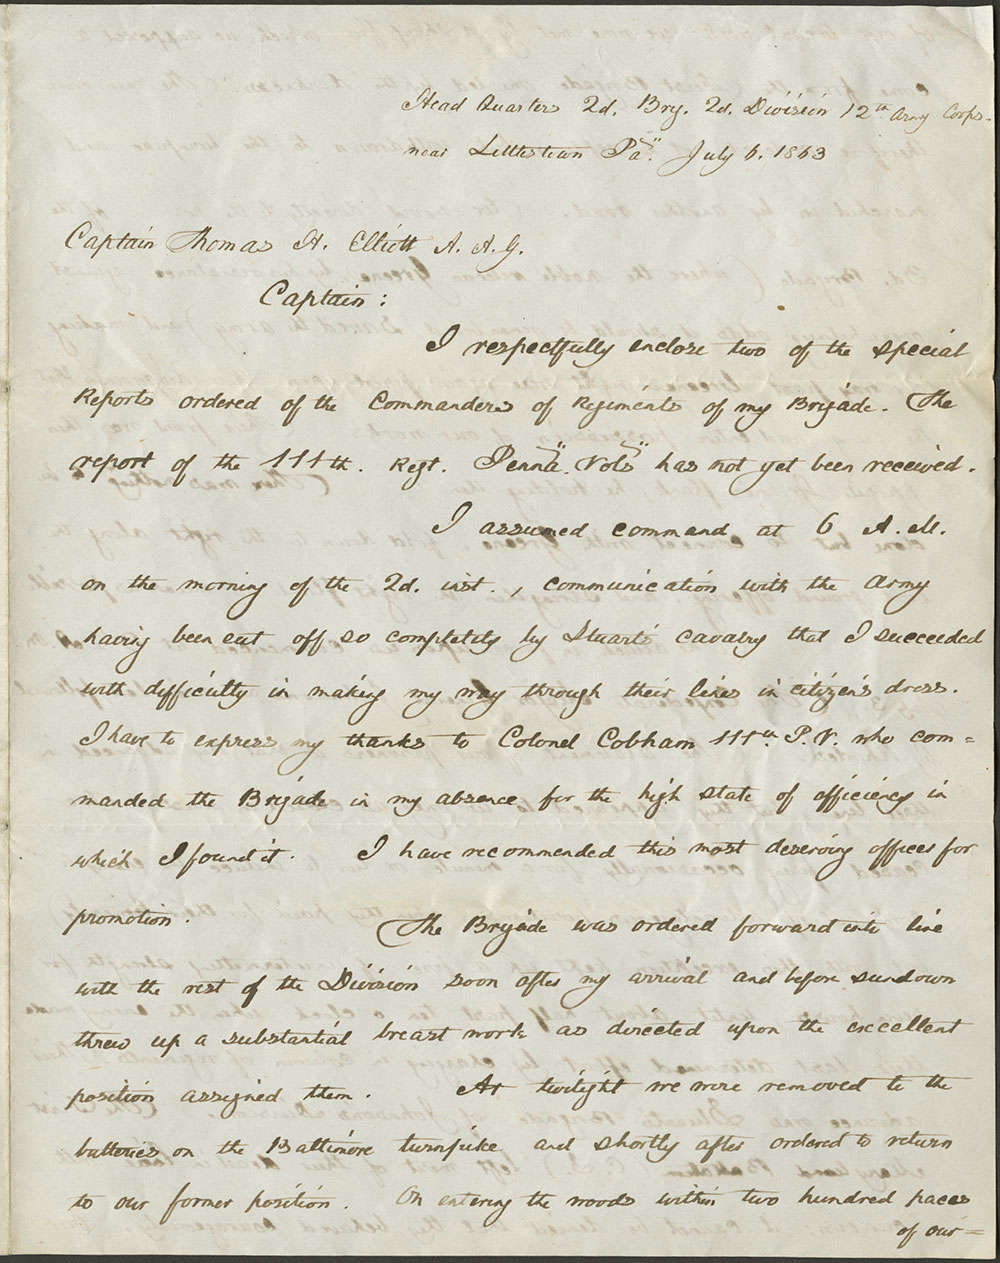 General Thomas L. Kane to Captain Thomas H. Elliott 6 July, 1863 (Vault MSS 792, Box 23, Folder 6, Item 29)